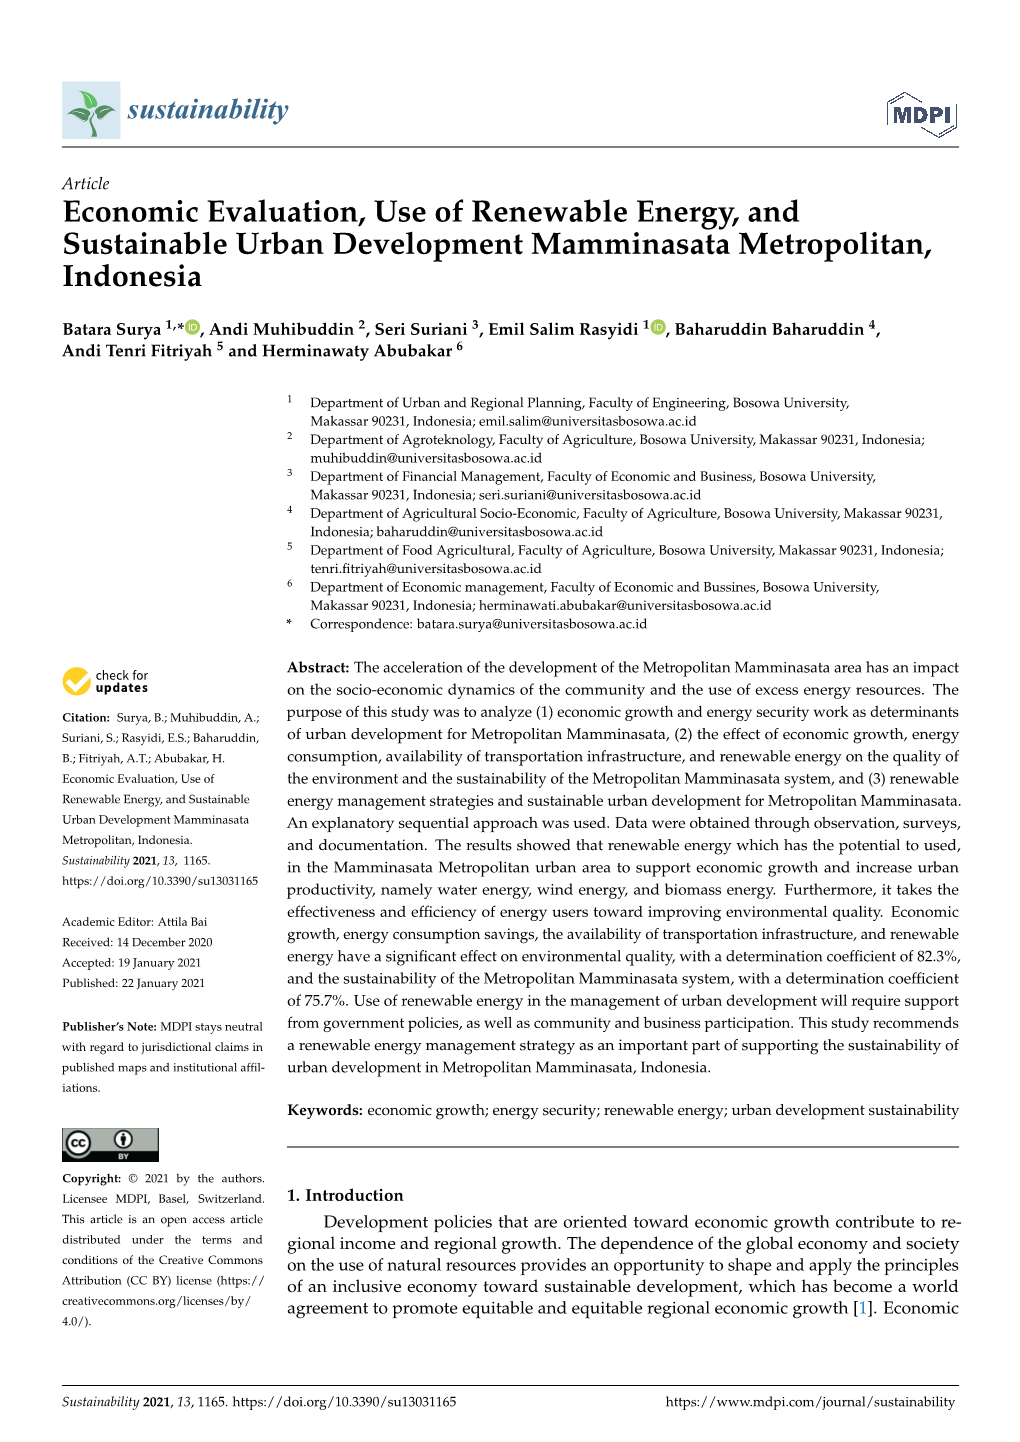 Economic Evaluation, Use of Renewable Energy, and Sustainable Urban Development Mamminasata Metropolitan, Indonesia